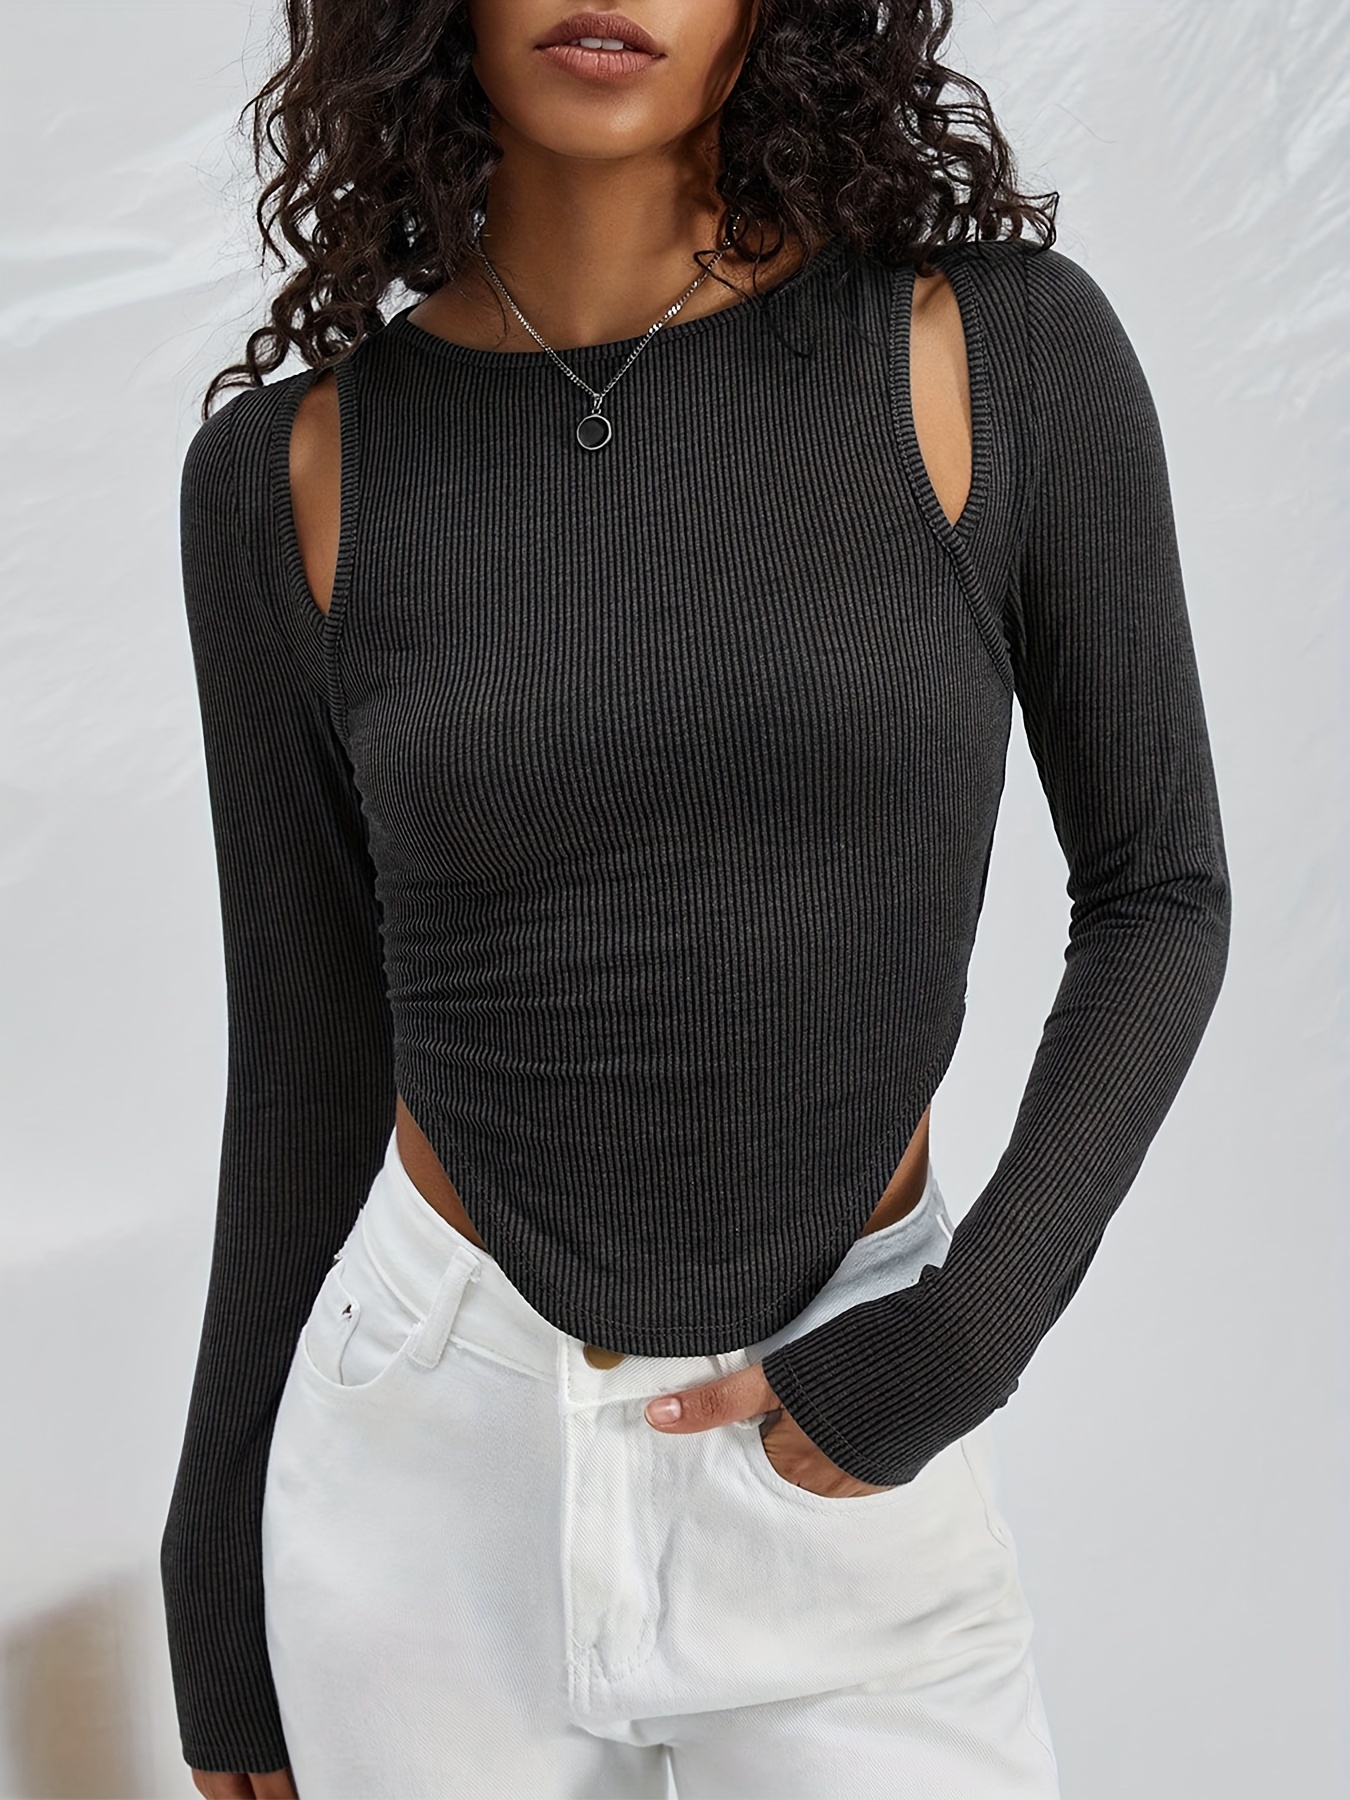 Camiseta negra manga larga de Camisetas y tops para Mujer